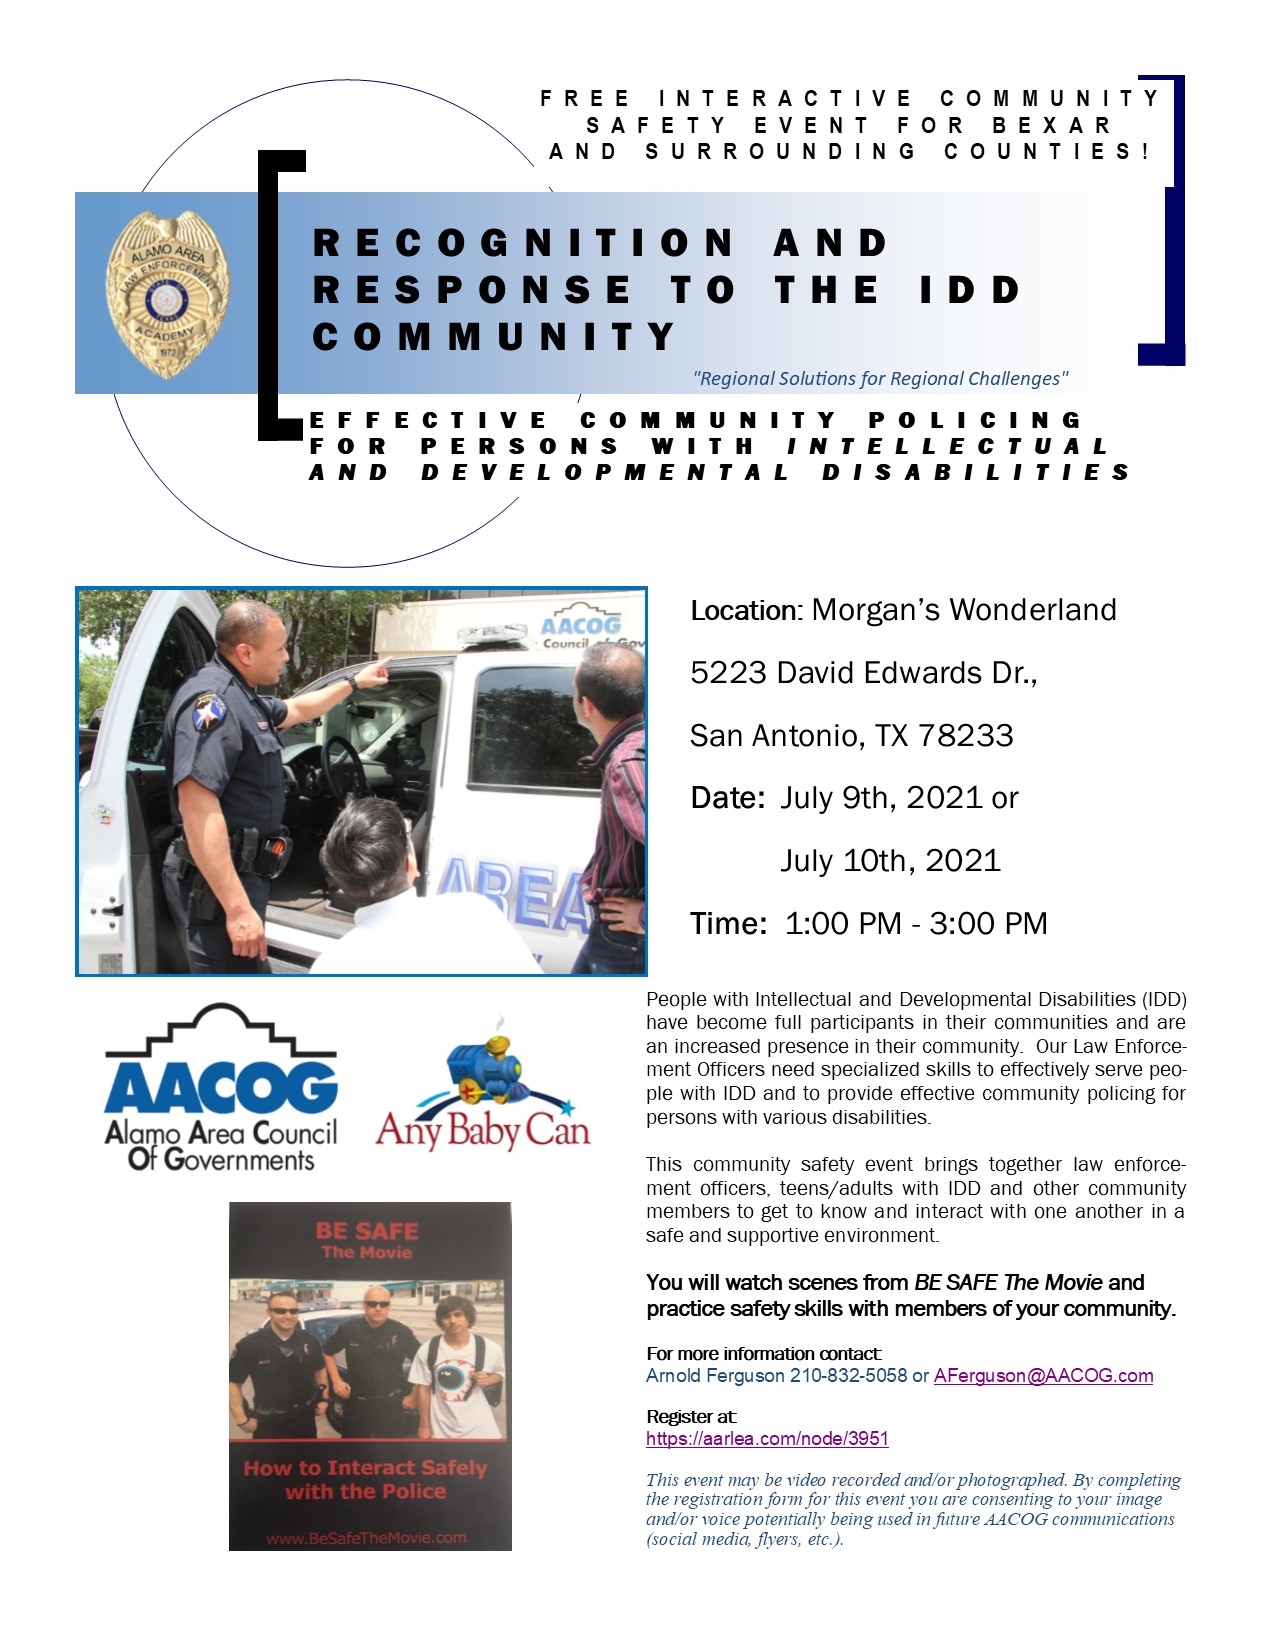 IDD Recognition Community Flyer 7-10-21 1pm-3pm